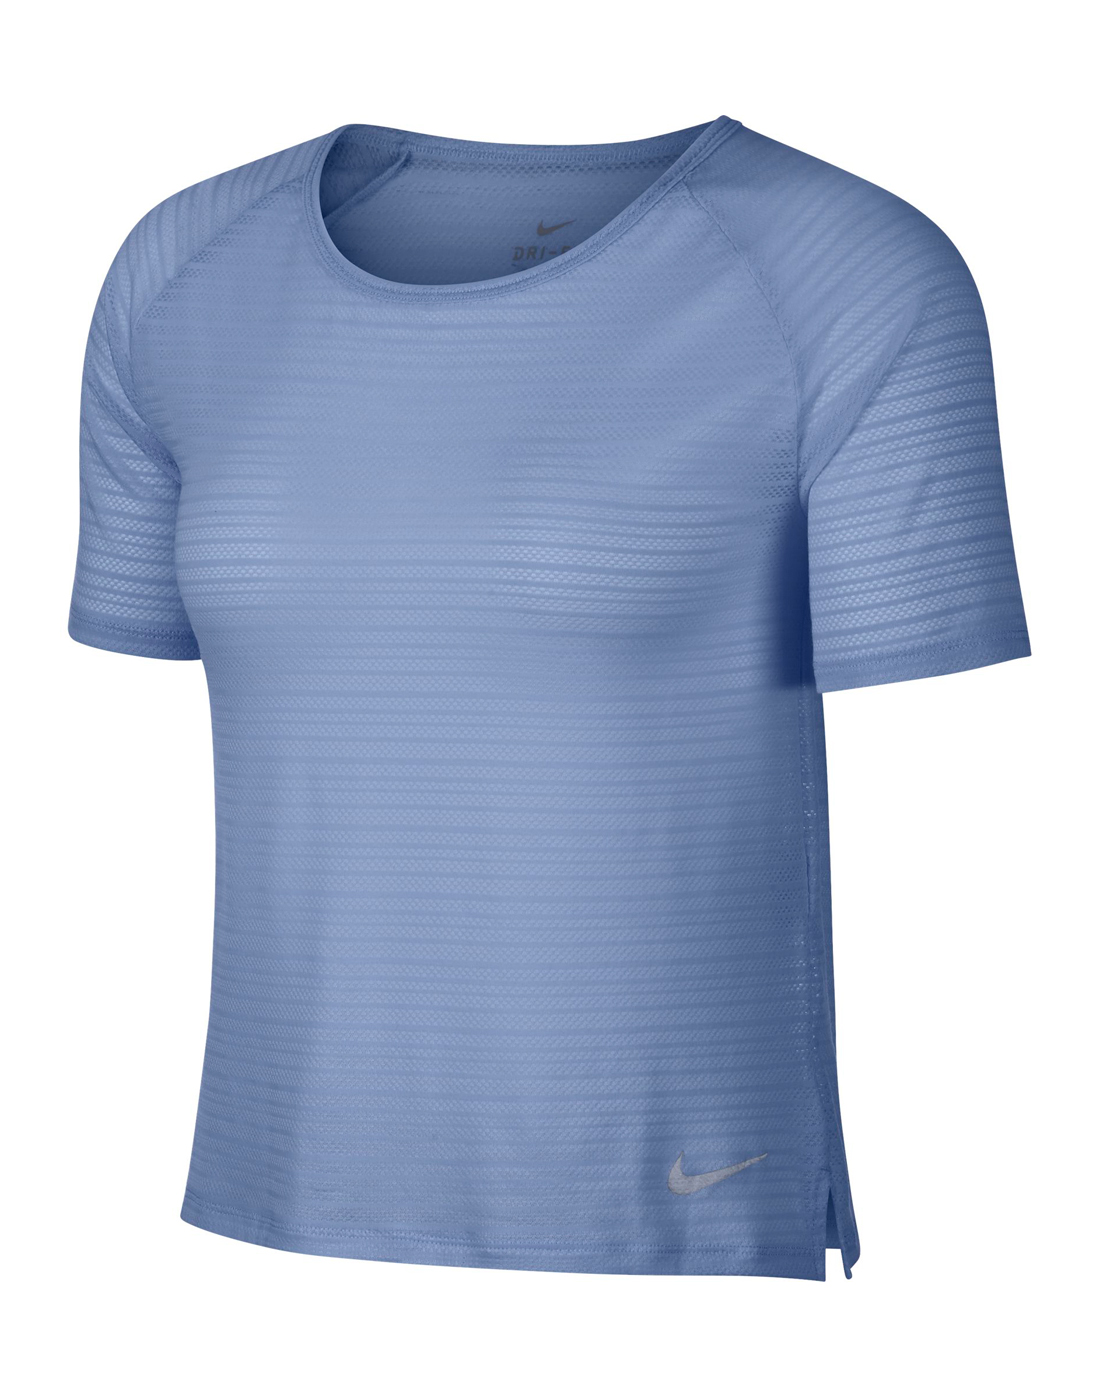 Nike Womens Miler Breathe T-Shirt - Blue | Life Style Sports IE